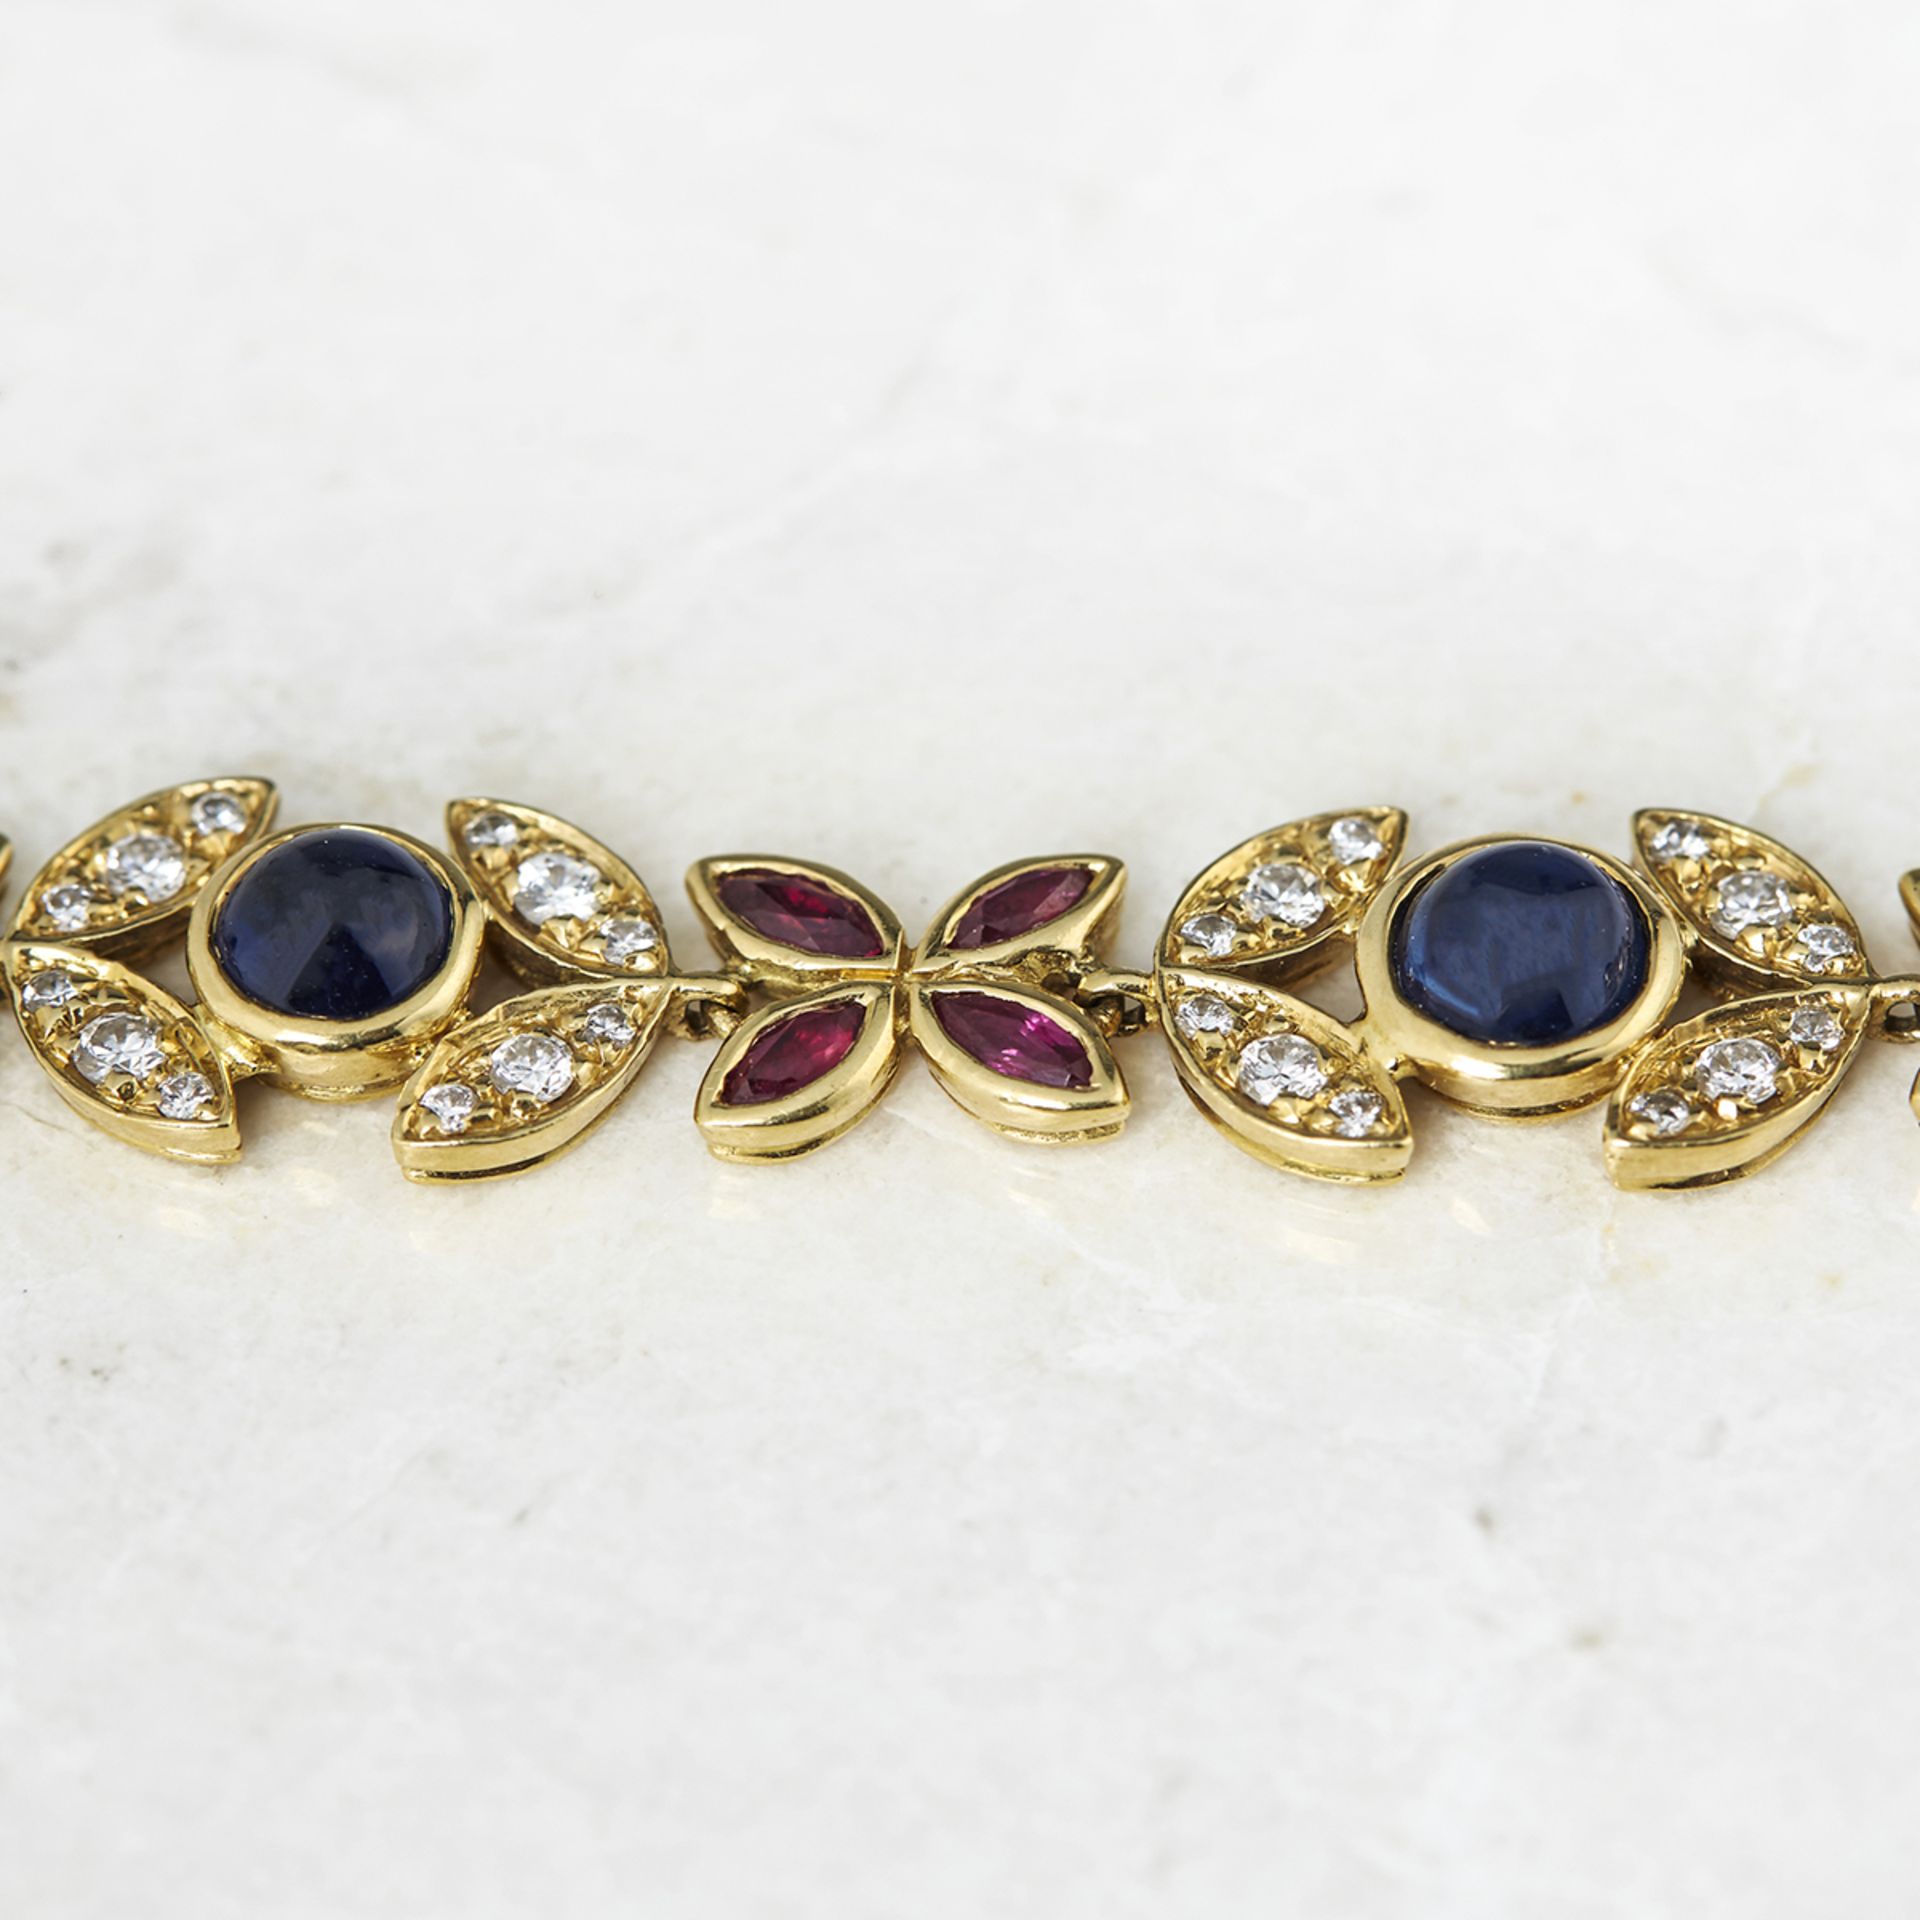 Fasoli 18k Yellow Gold 5.25ct Sapphire, 2.80ct Ruby & 1.40ct Diamond Bracelet - Image 7 of 8